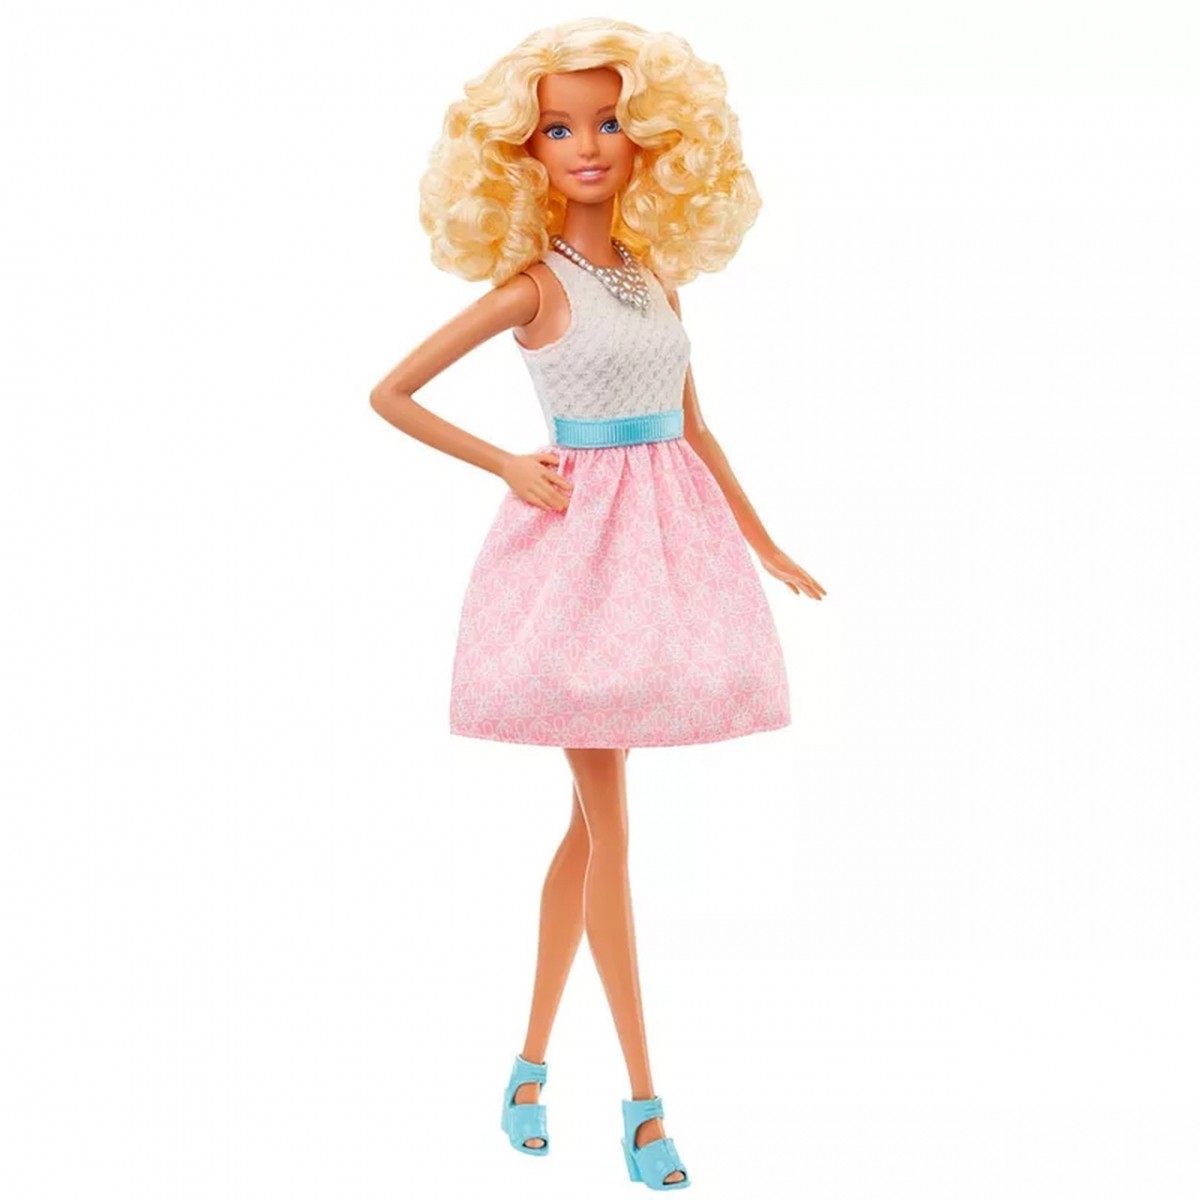 Boneca Barbie Fashionista (Loira de Vestido Branco e Rosa)